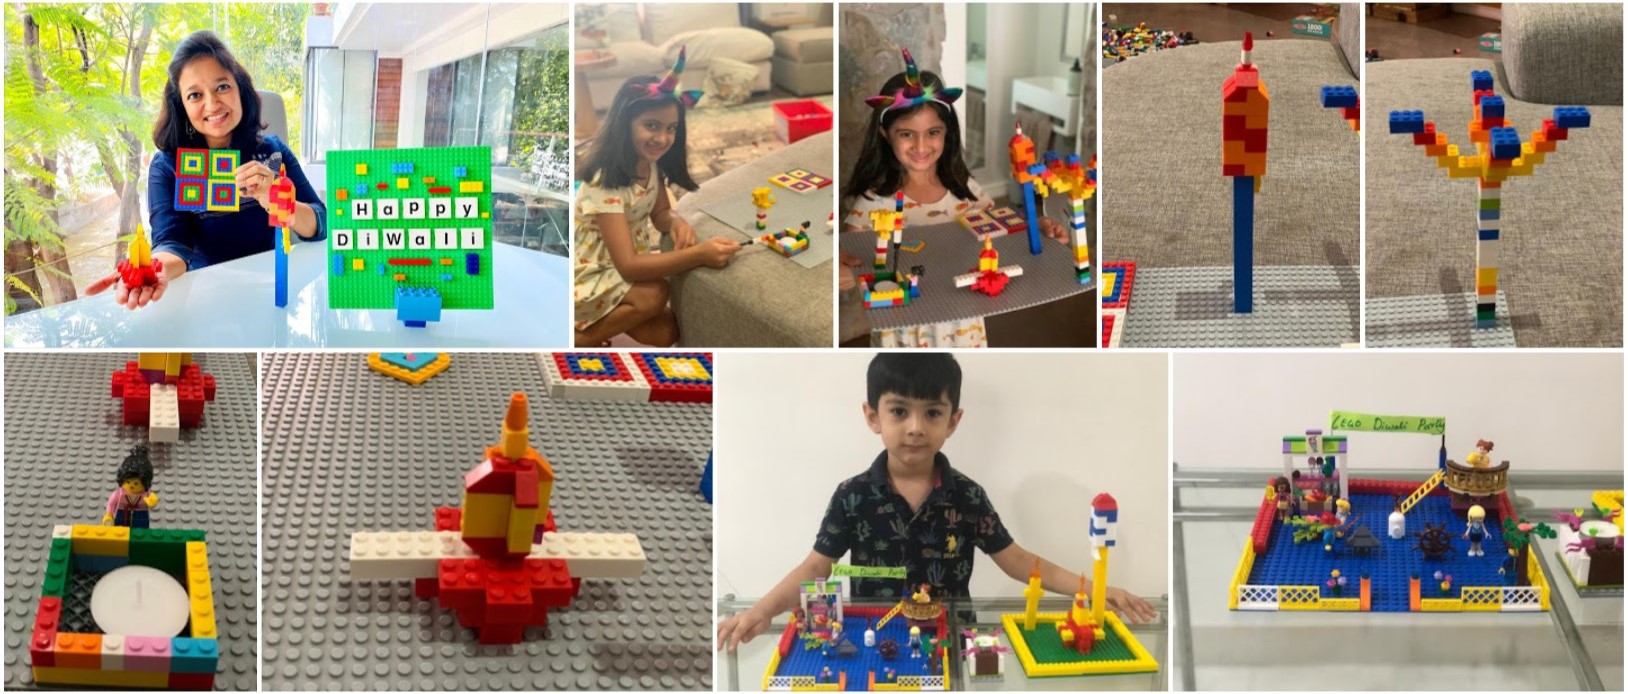 diwali 2020 photos 'LEGO'wali Diwali TeachSTEAM